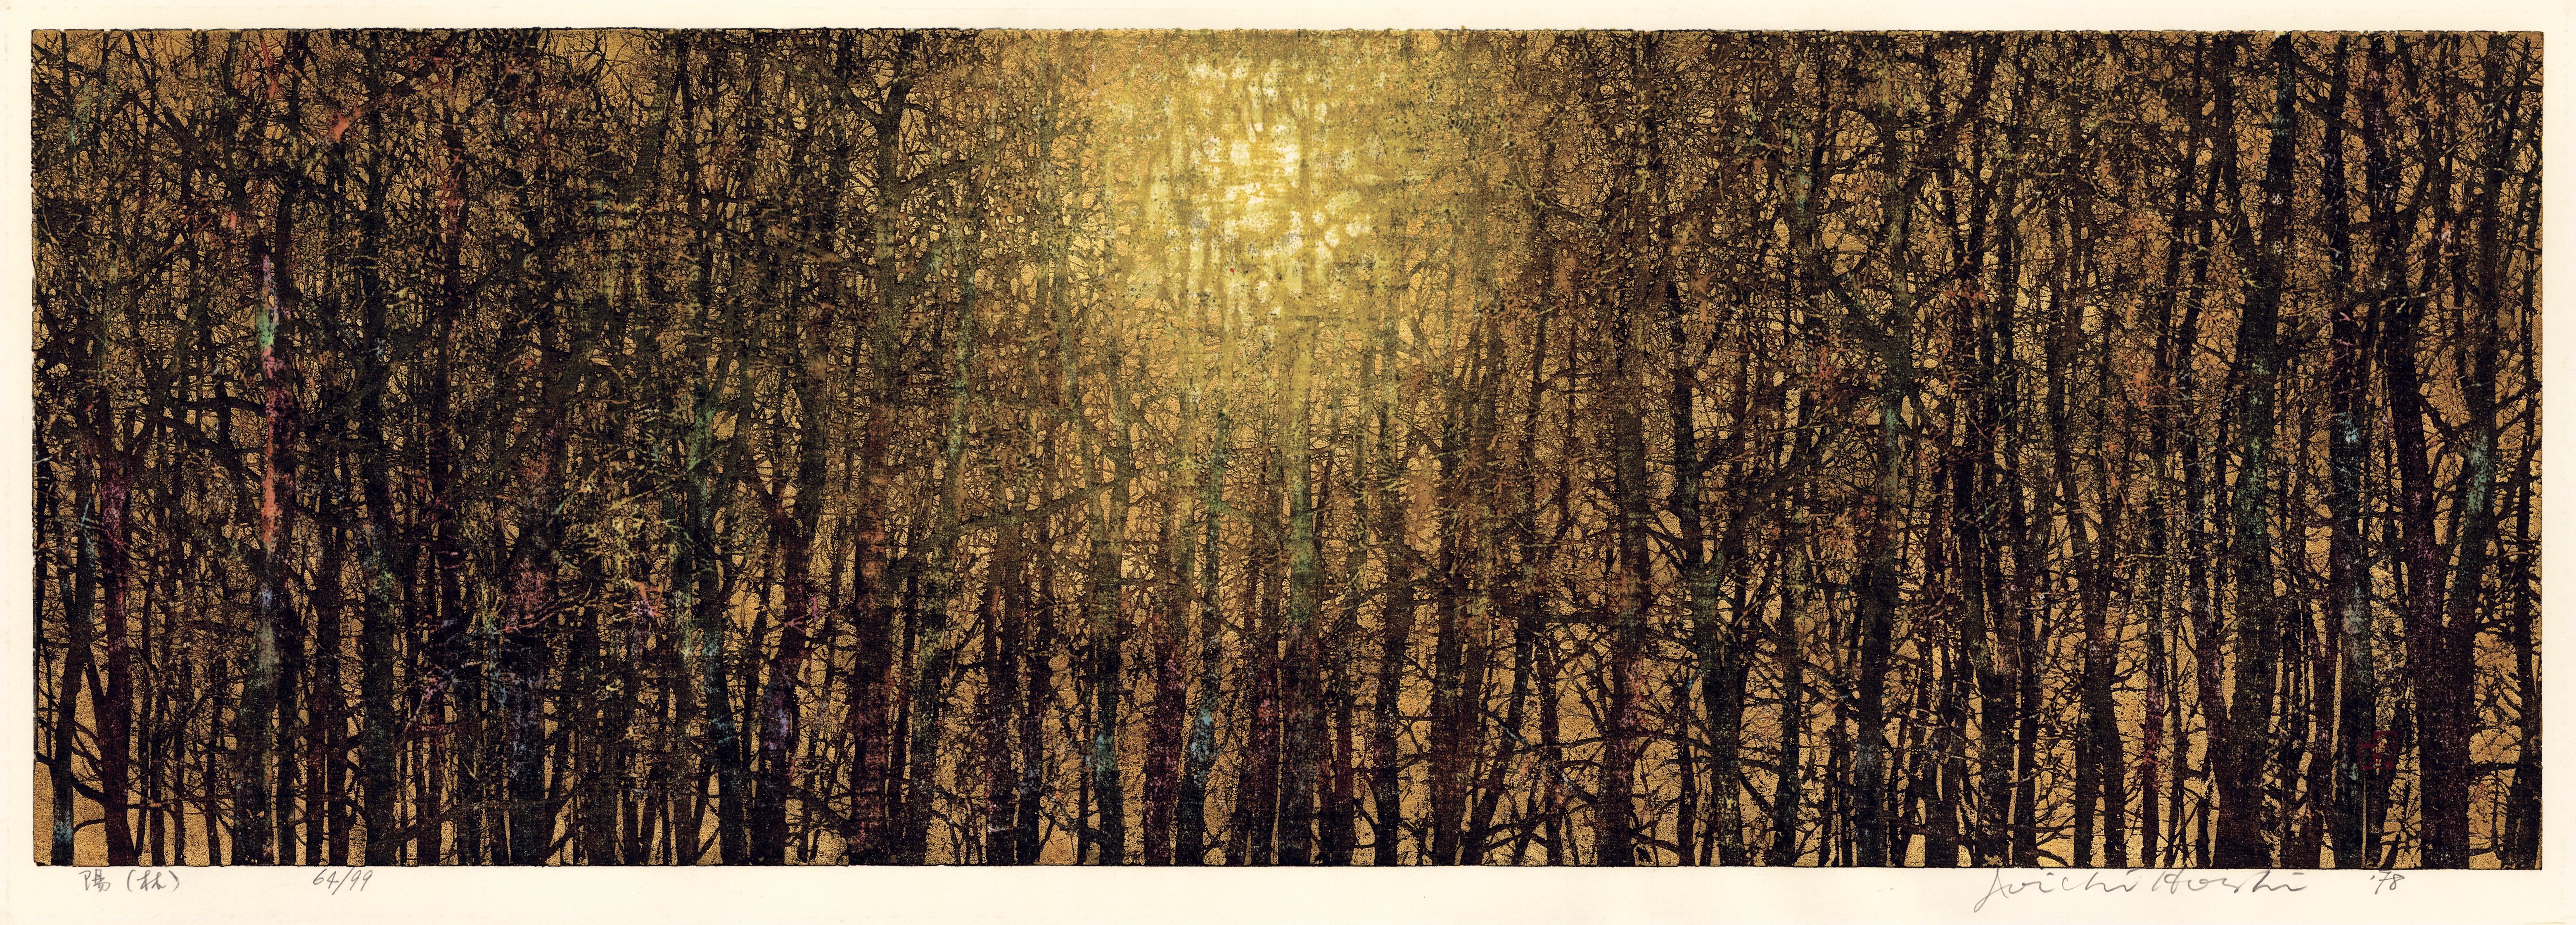 Joichi Hoshi Landscape Print - Sun Light (Forest)